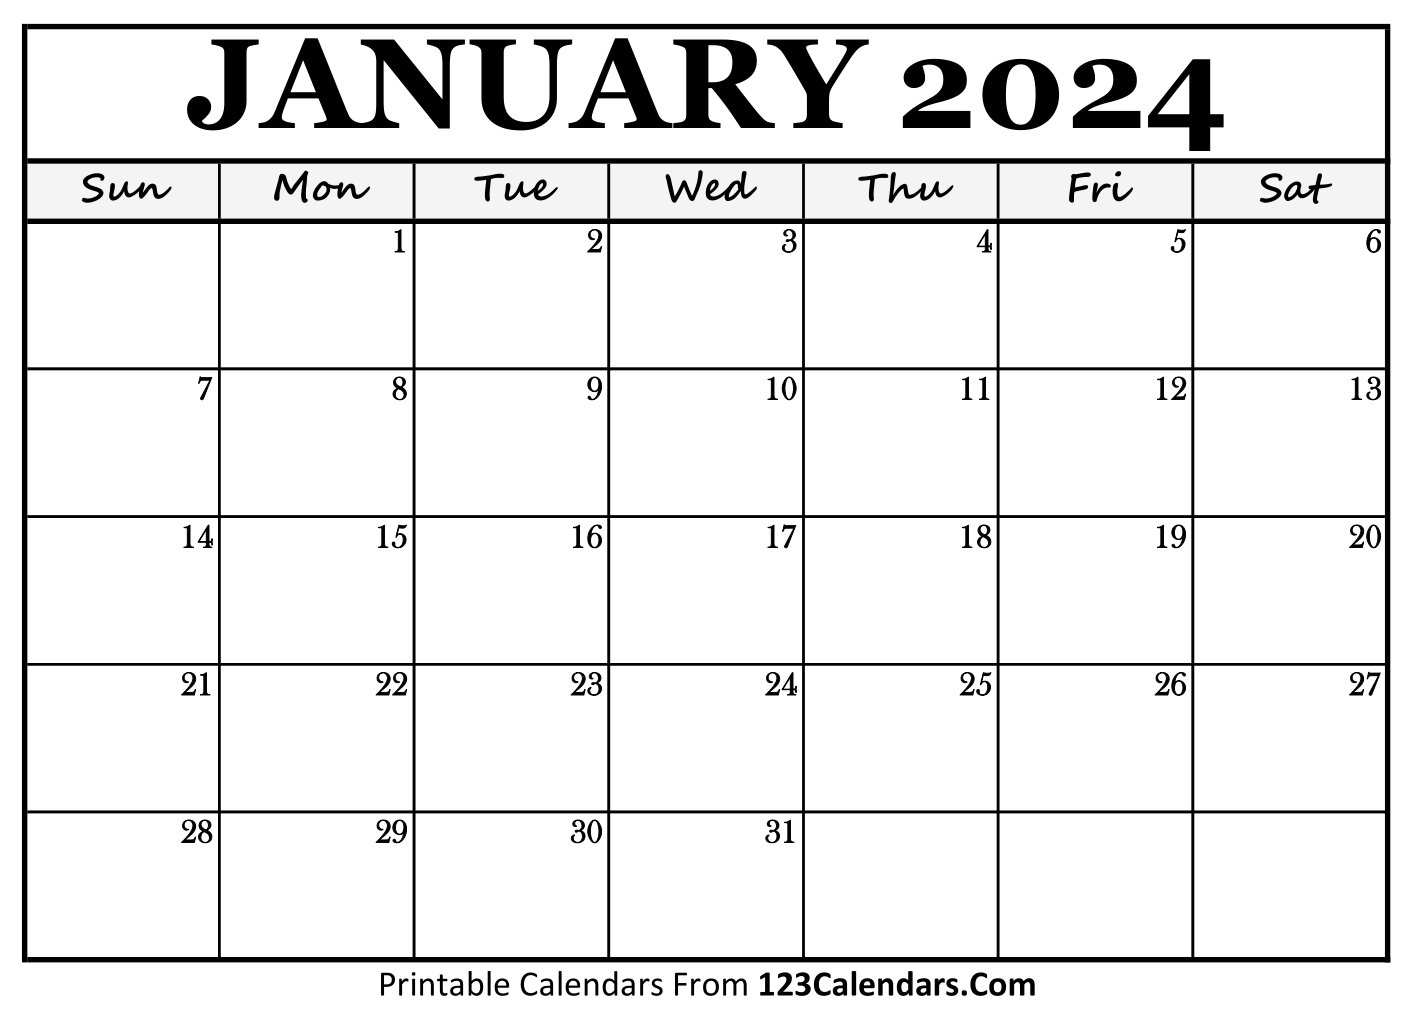 Printable January 2024 Calendar Templates - 123Calendars | Printable Calendar 2024 Jan